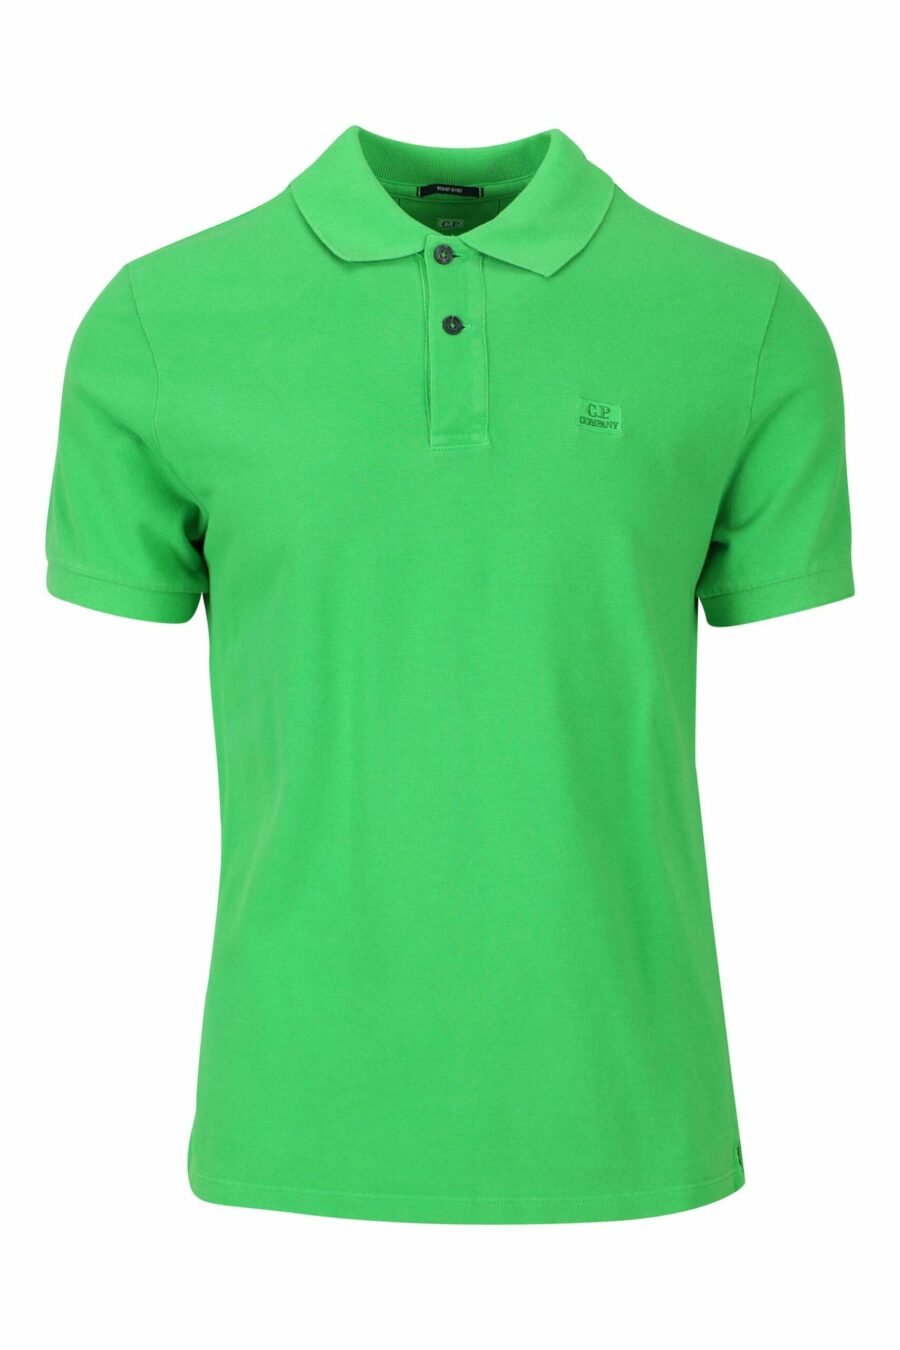 Grünes Poloshirt mit Mini-Logoaufnäher - 7620943642308 1 skaliert